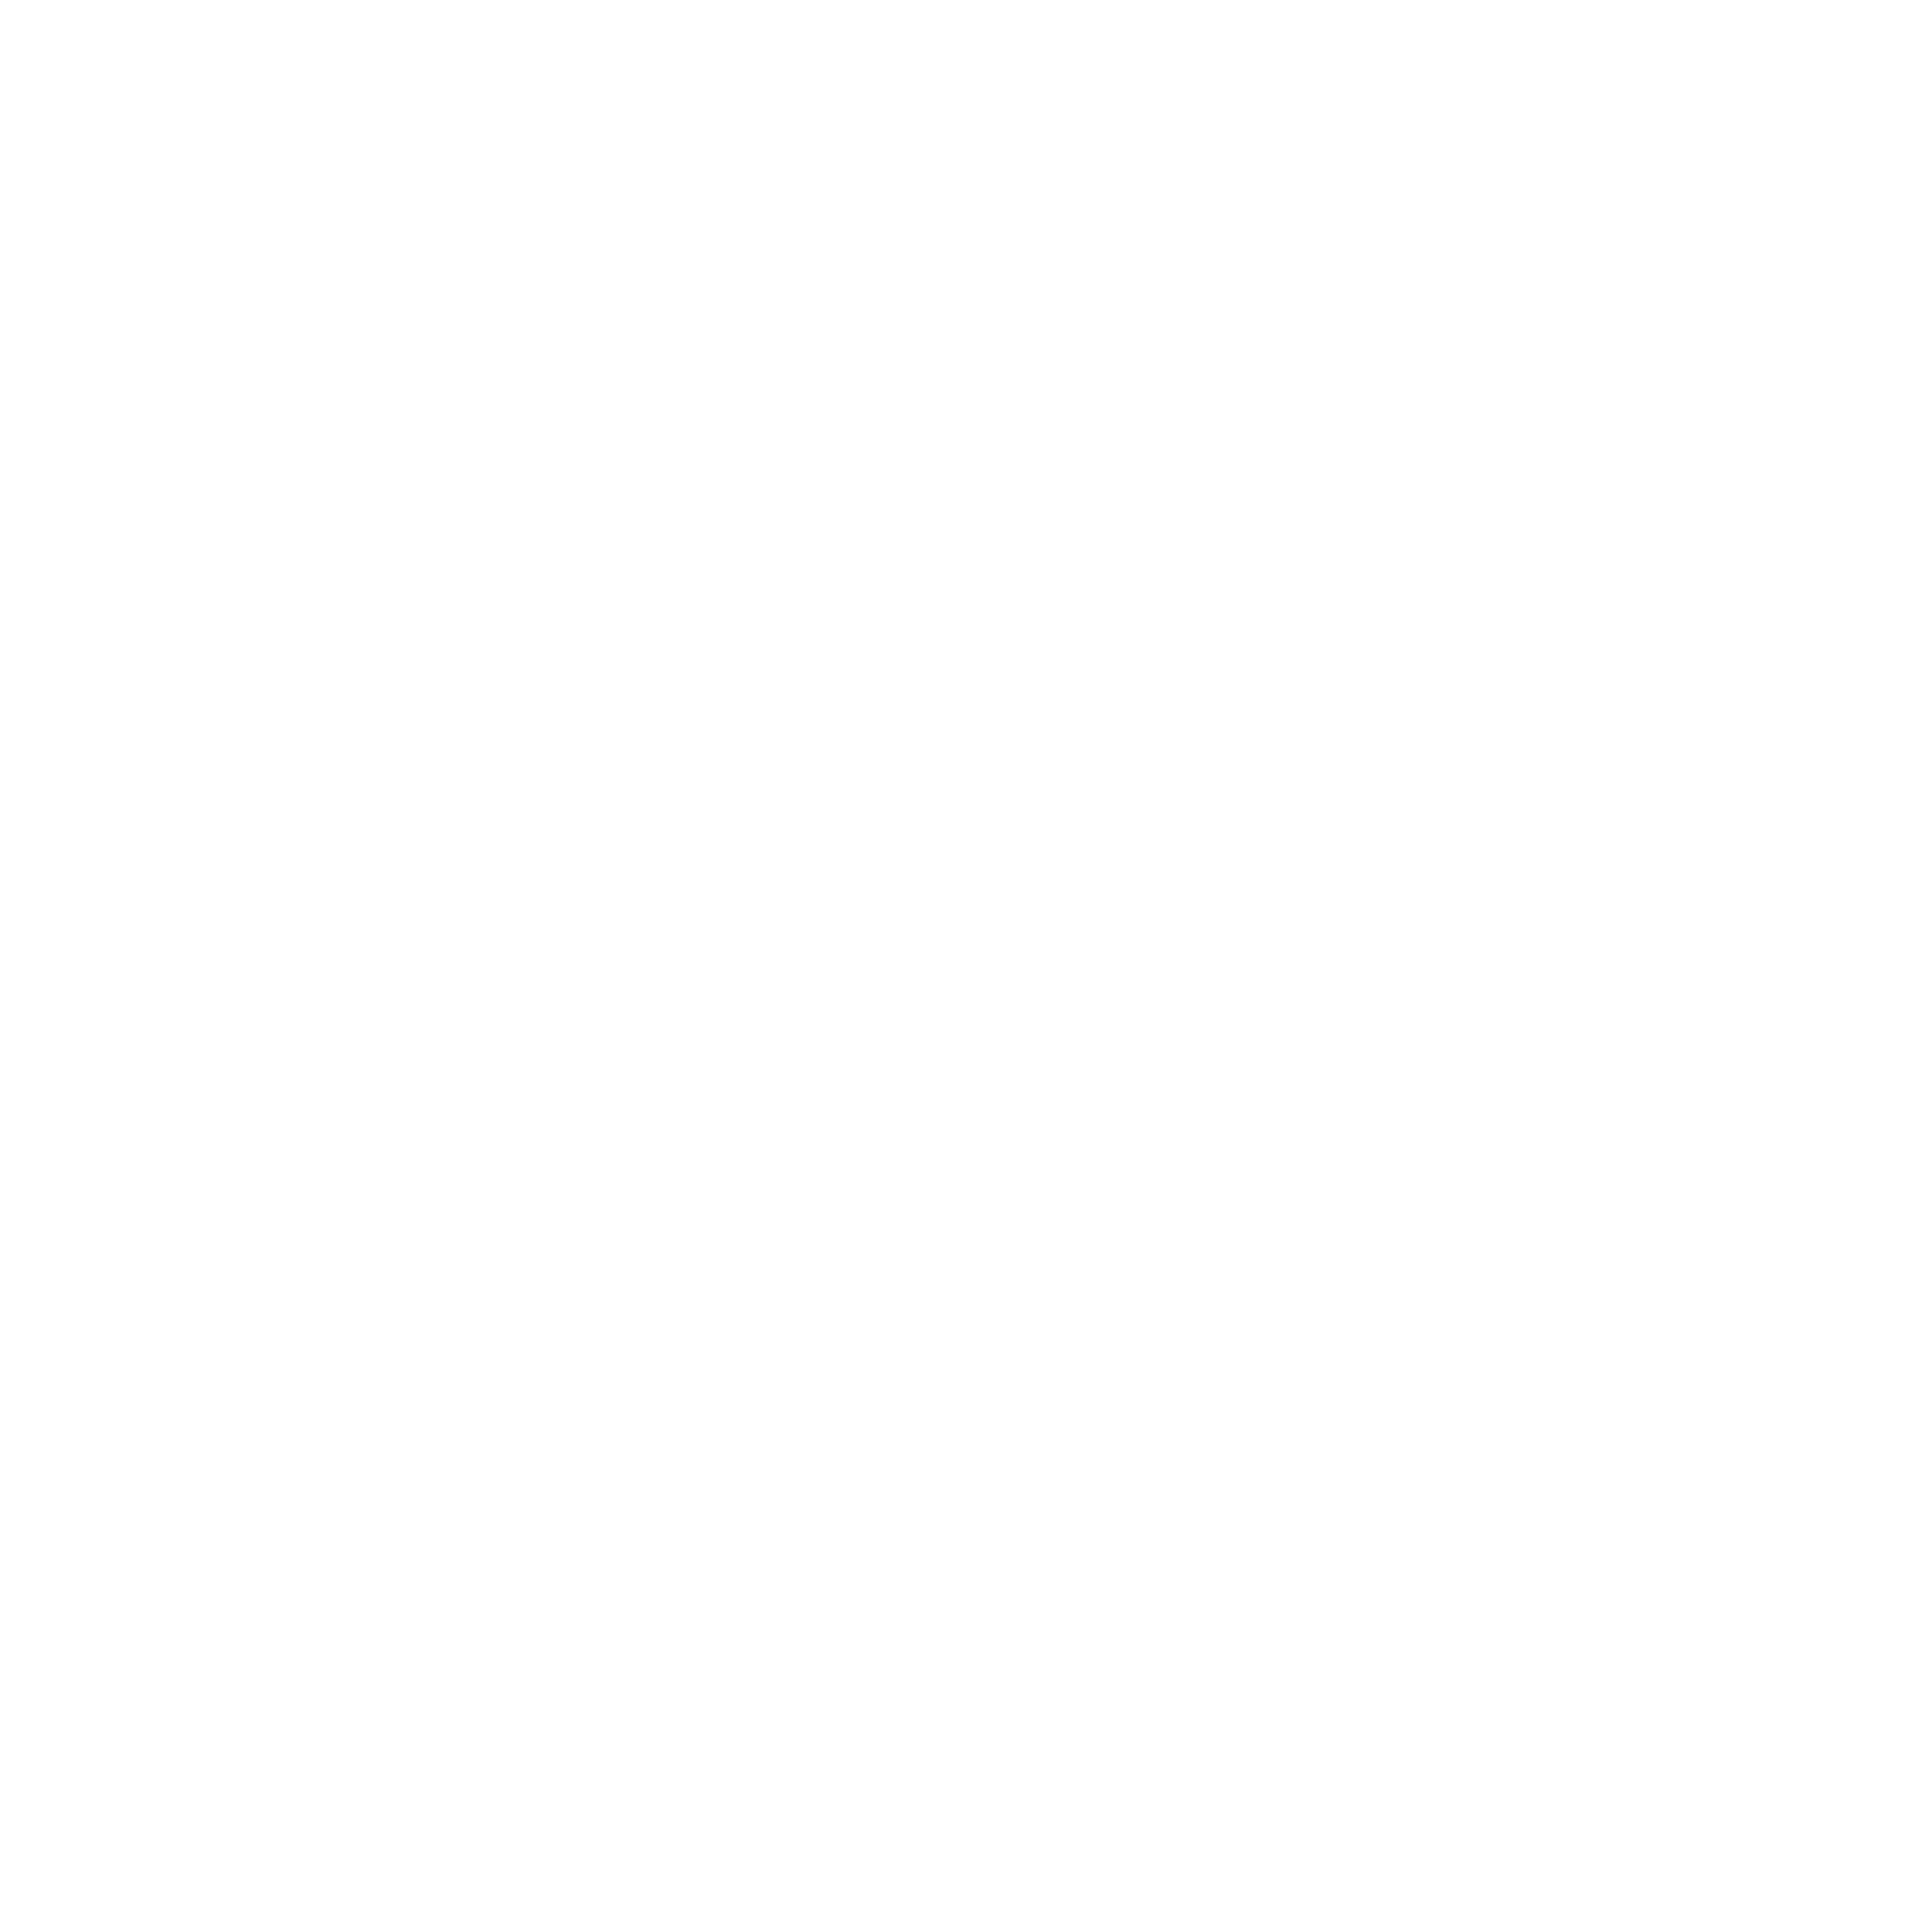 Great Lakes Financial Strategies